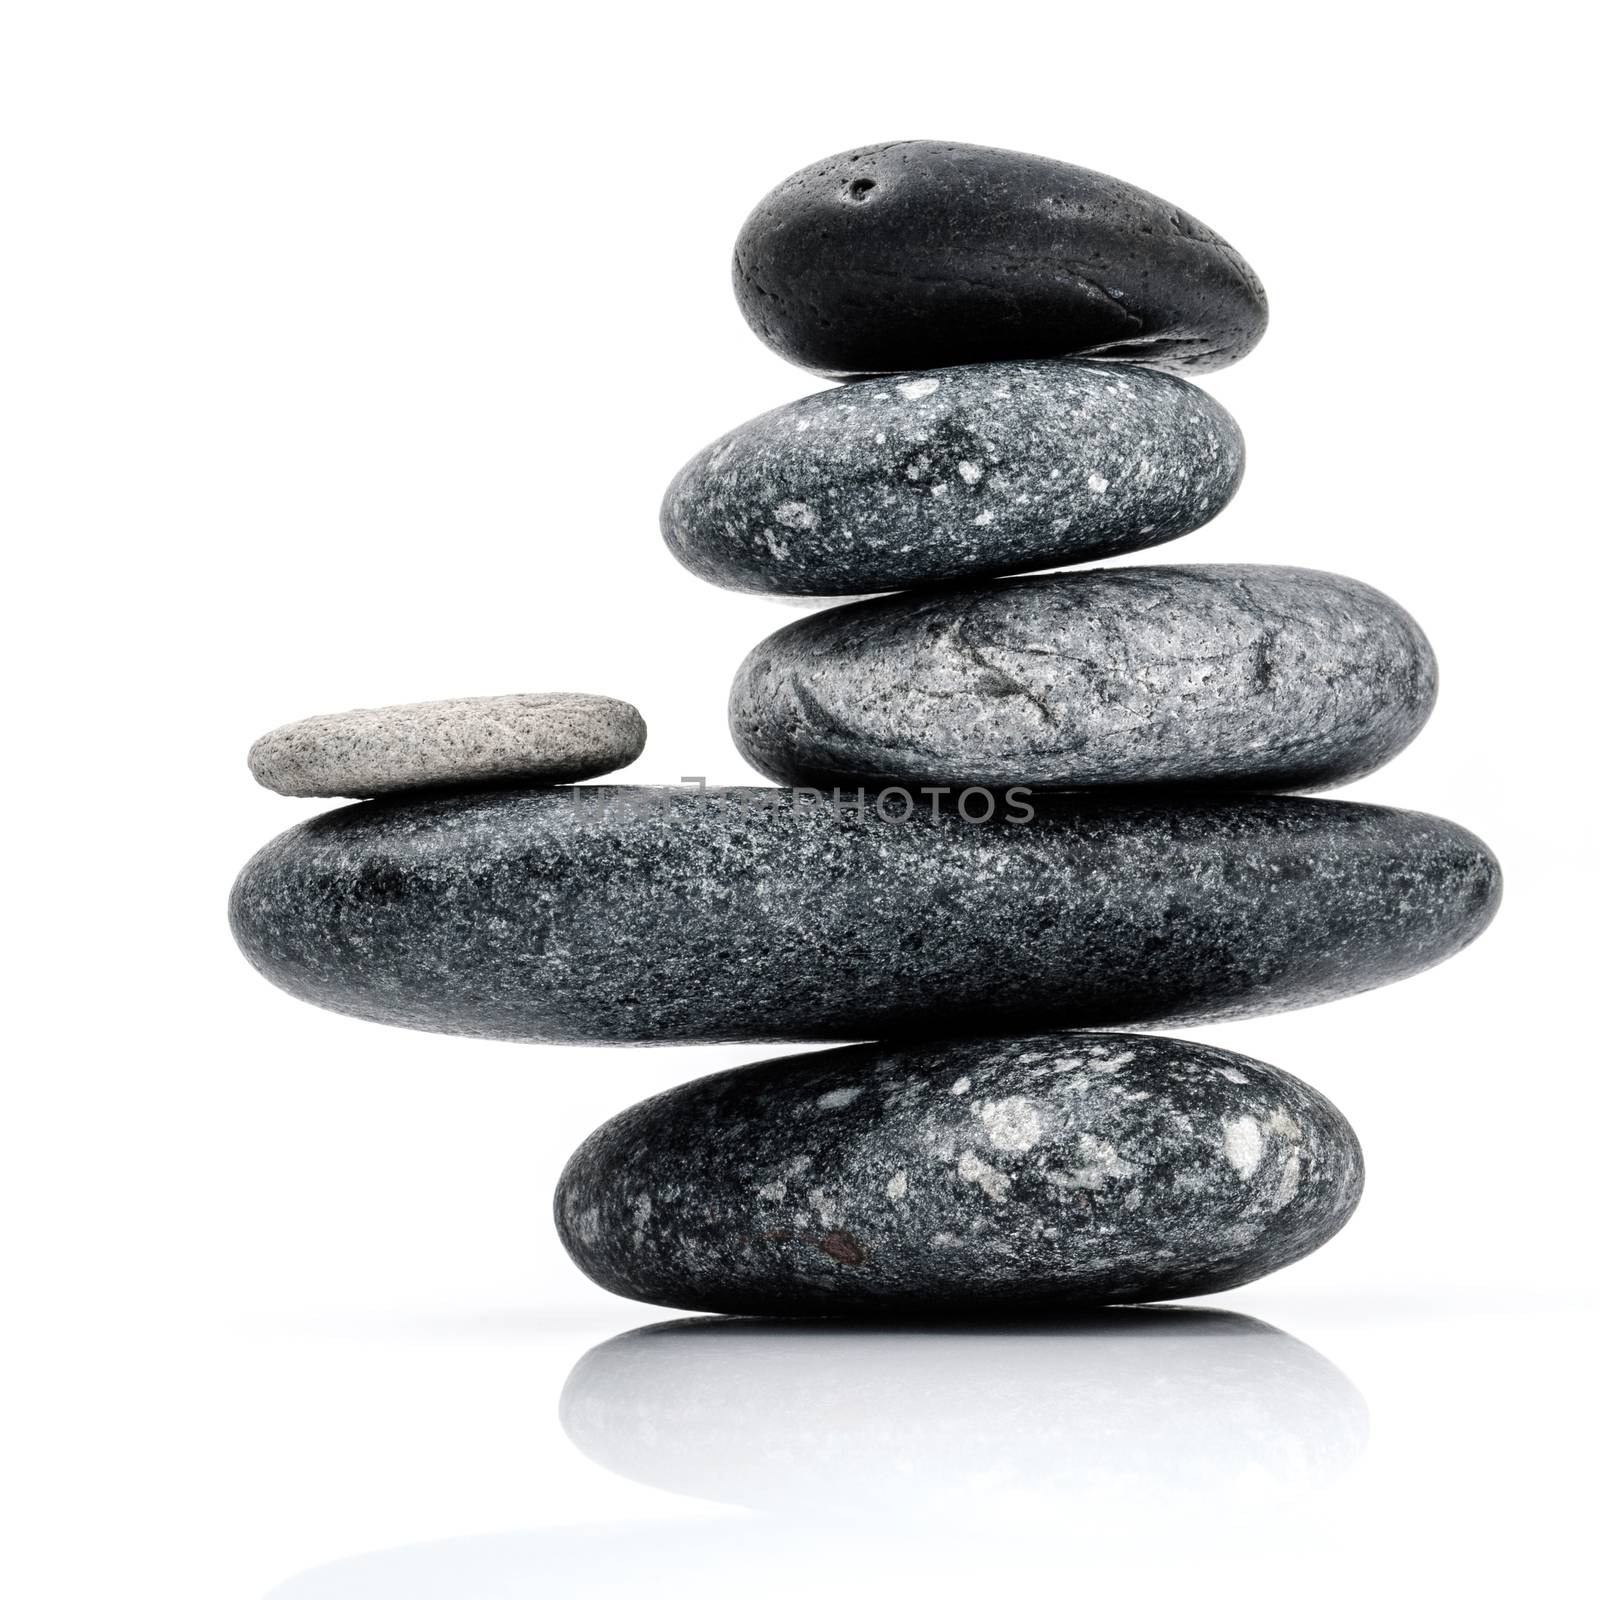 The stack of Stones spa treatment scene zen like concepts. The stack of Stones spa isolated on white background. 